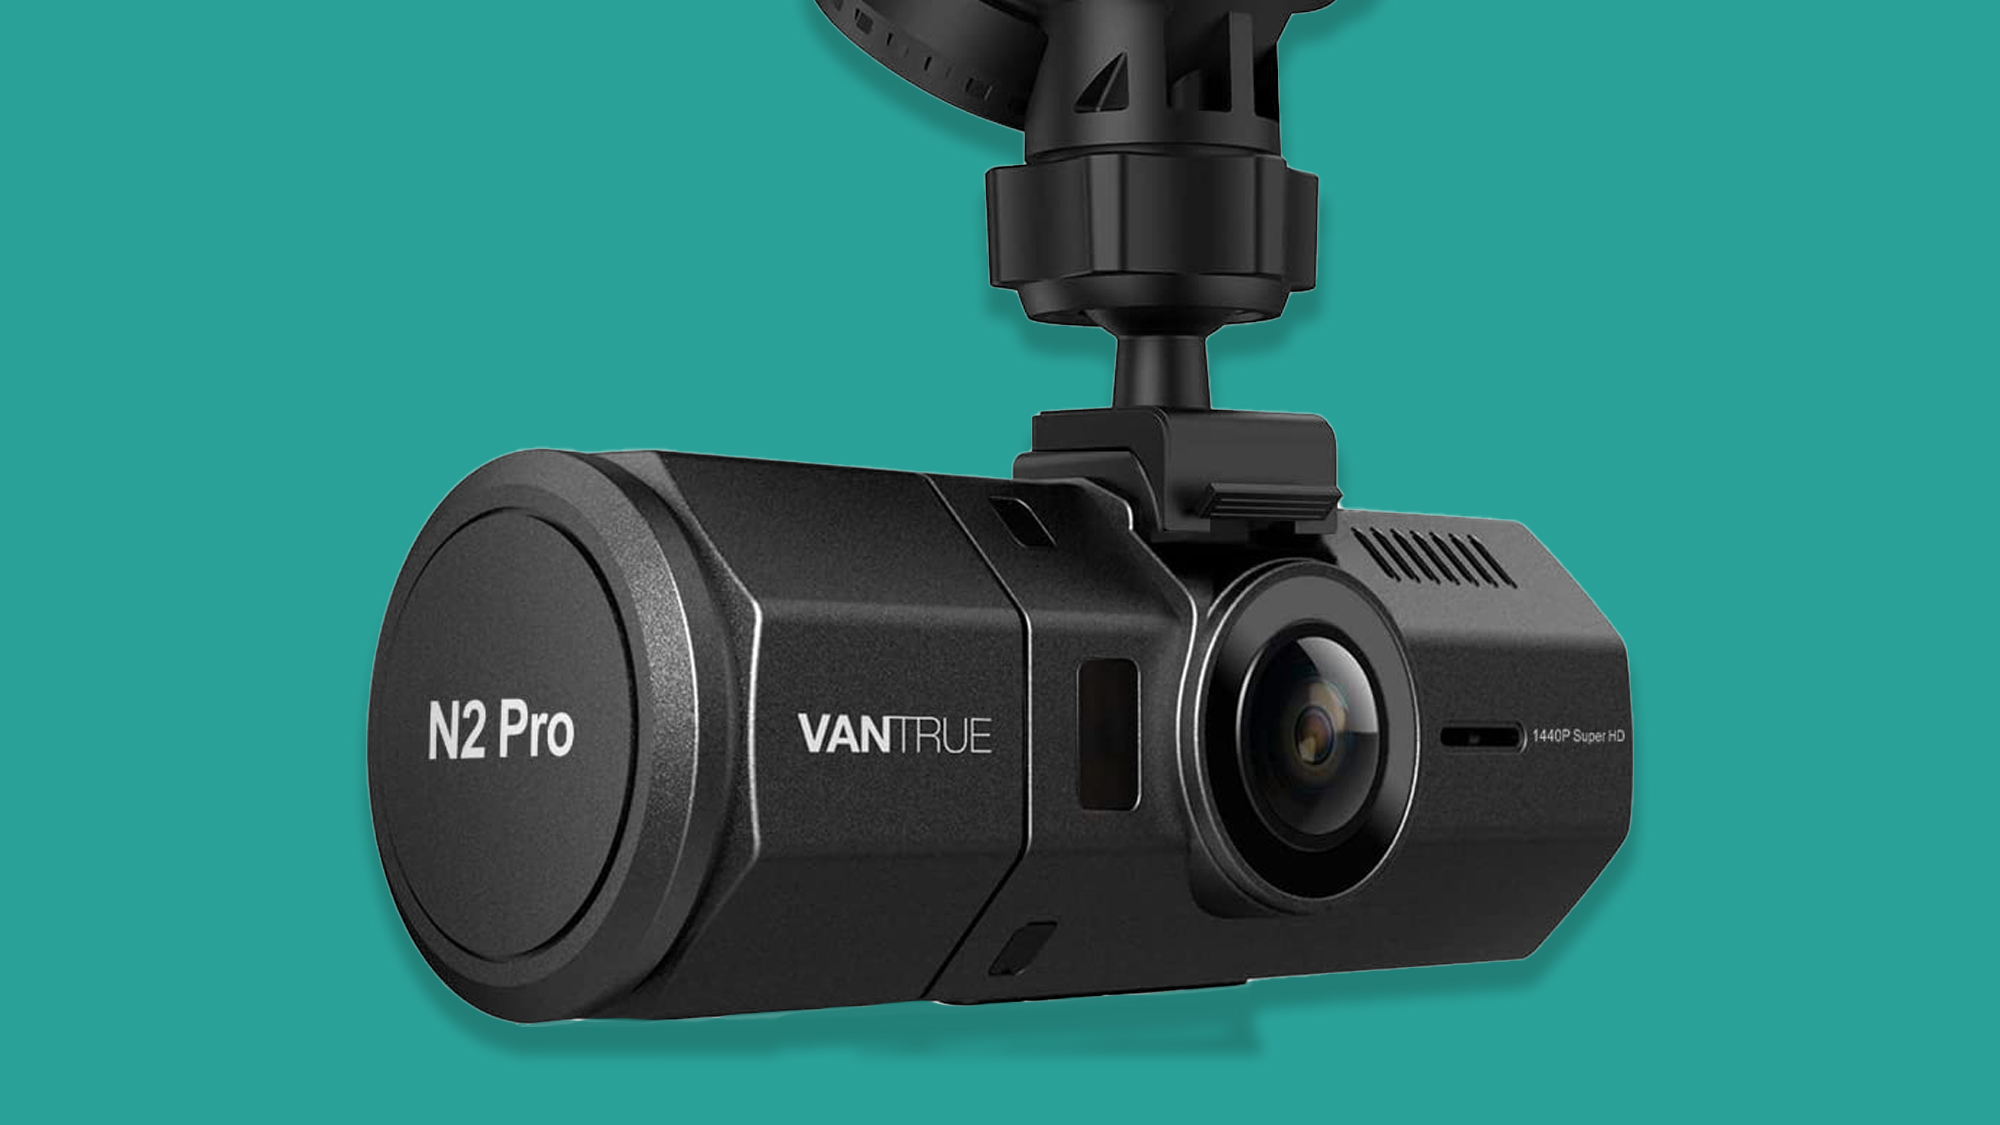 Vantrue N2 Pro dash cam on a cyan background